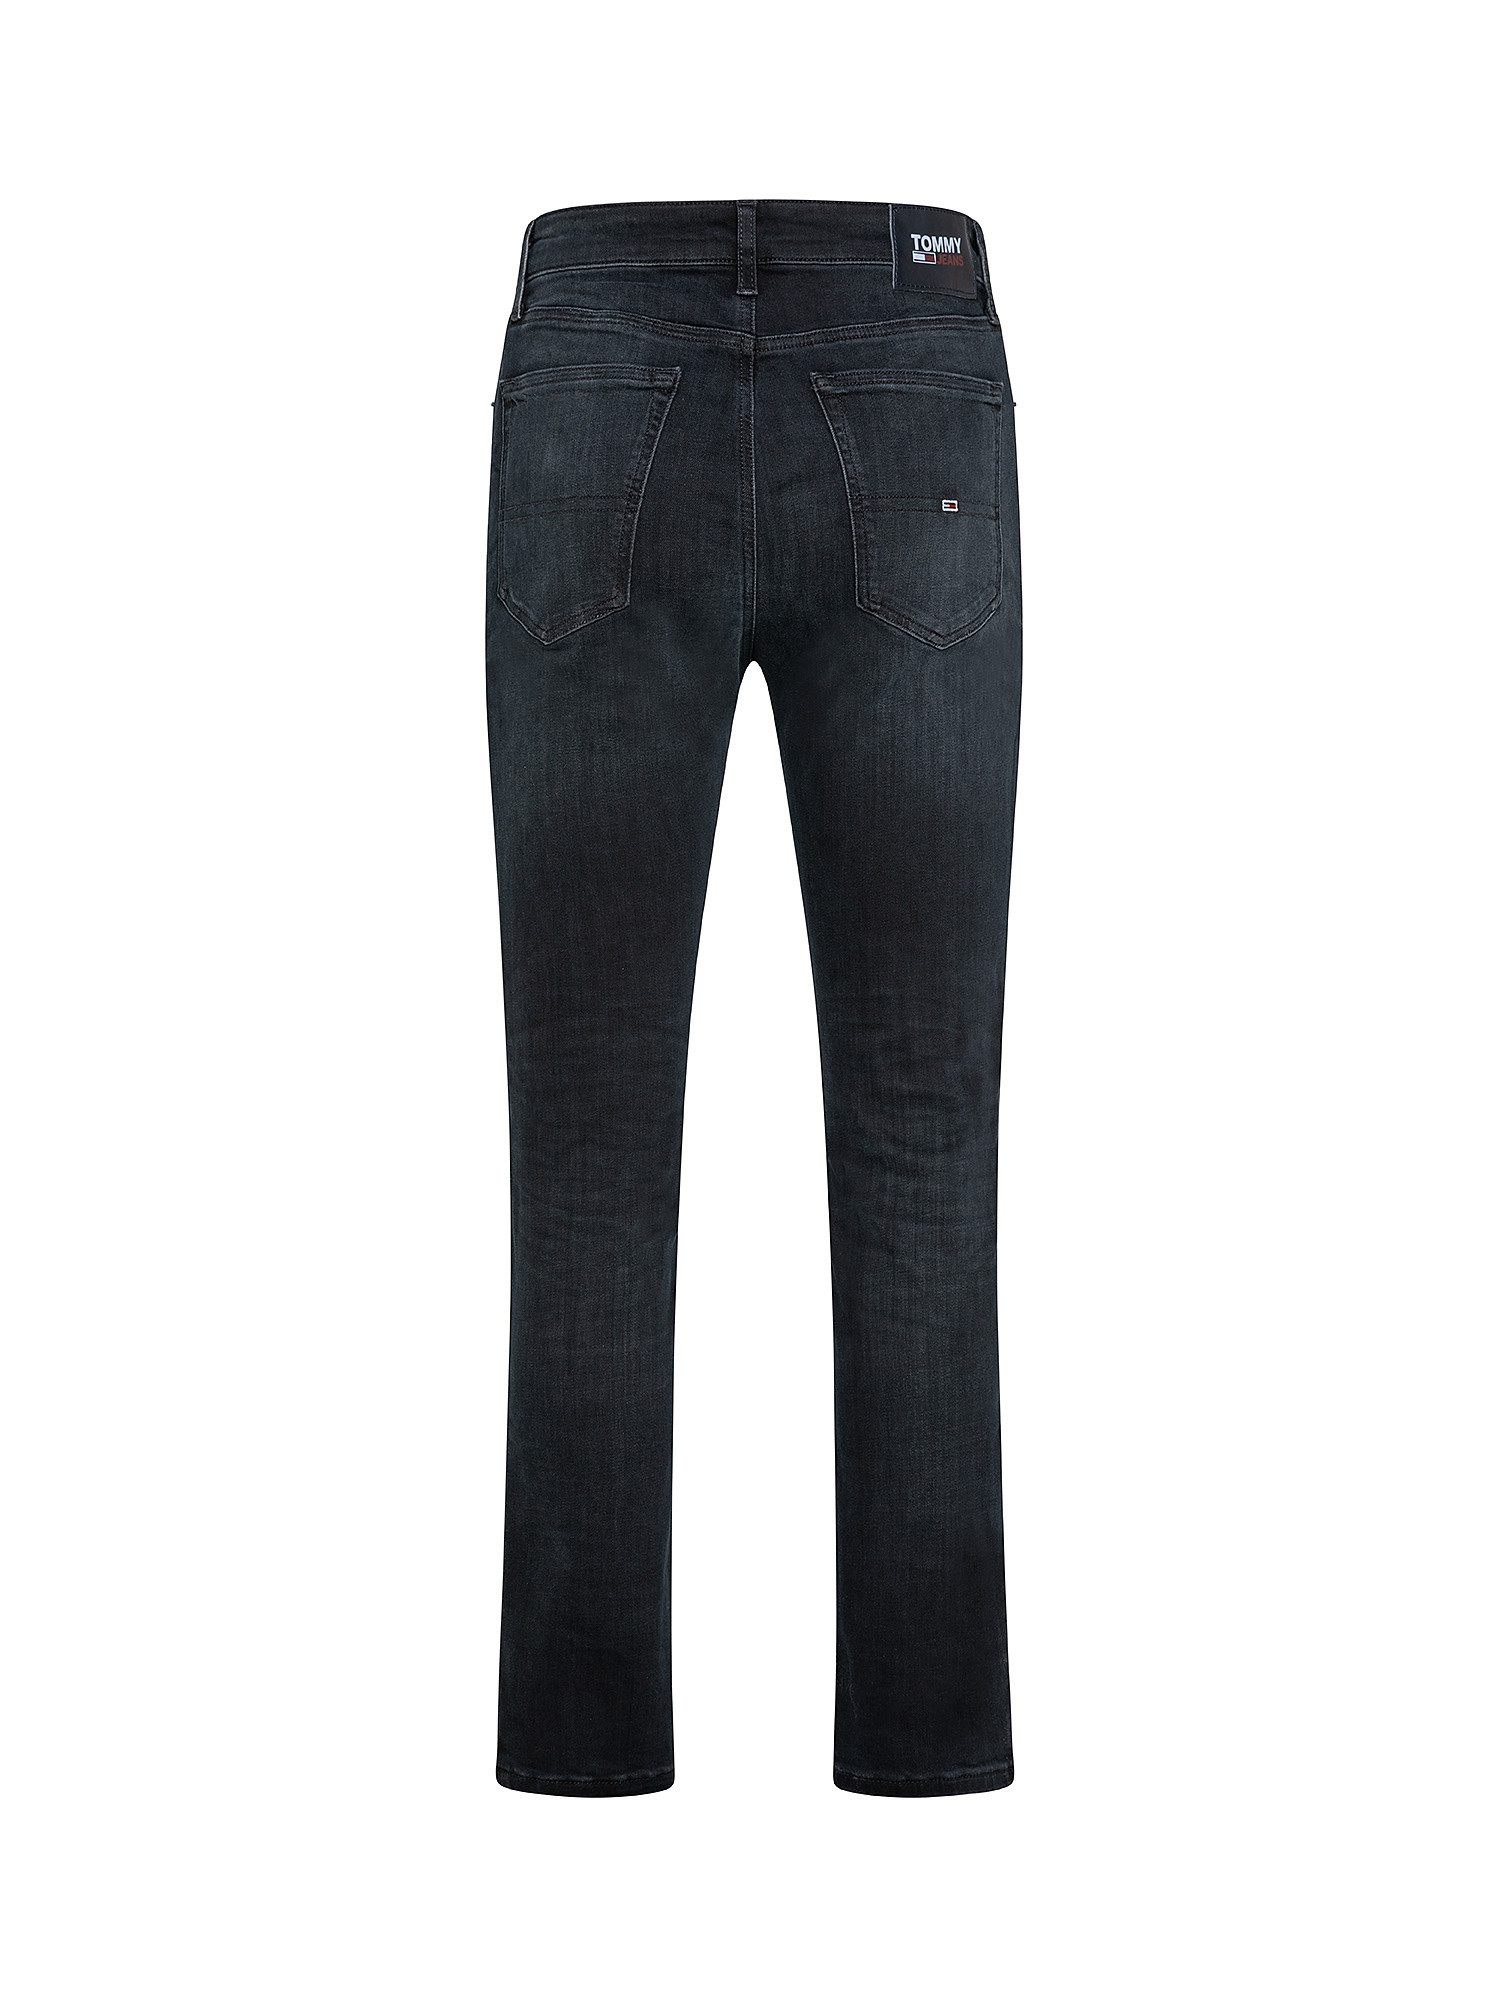 Simon skinny fit jeans, Black, large image number 1